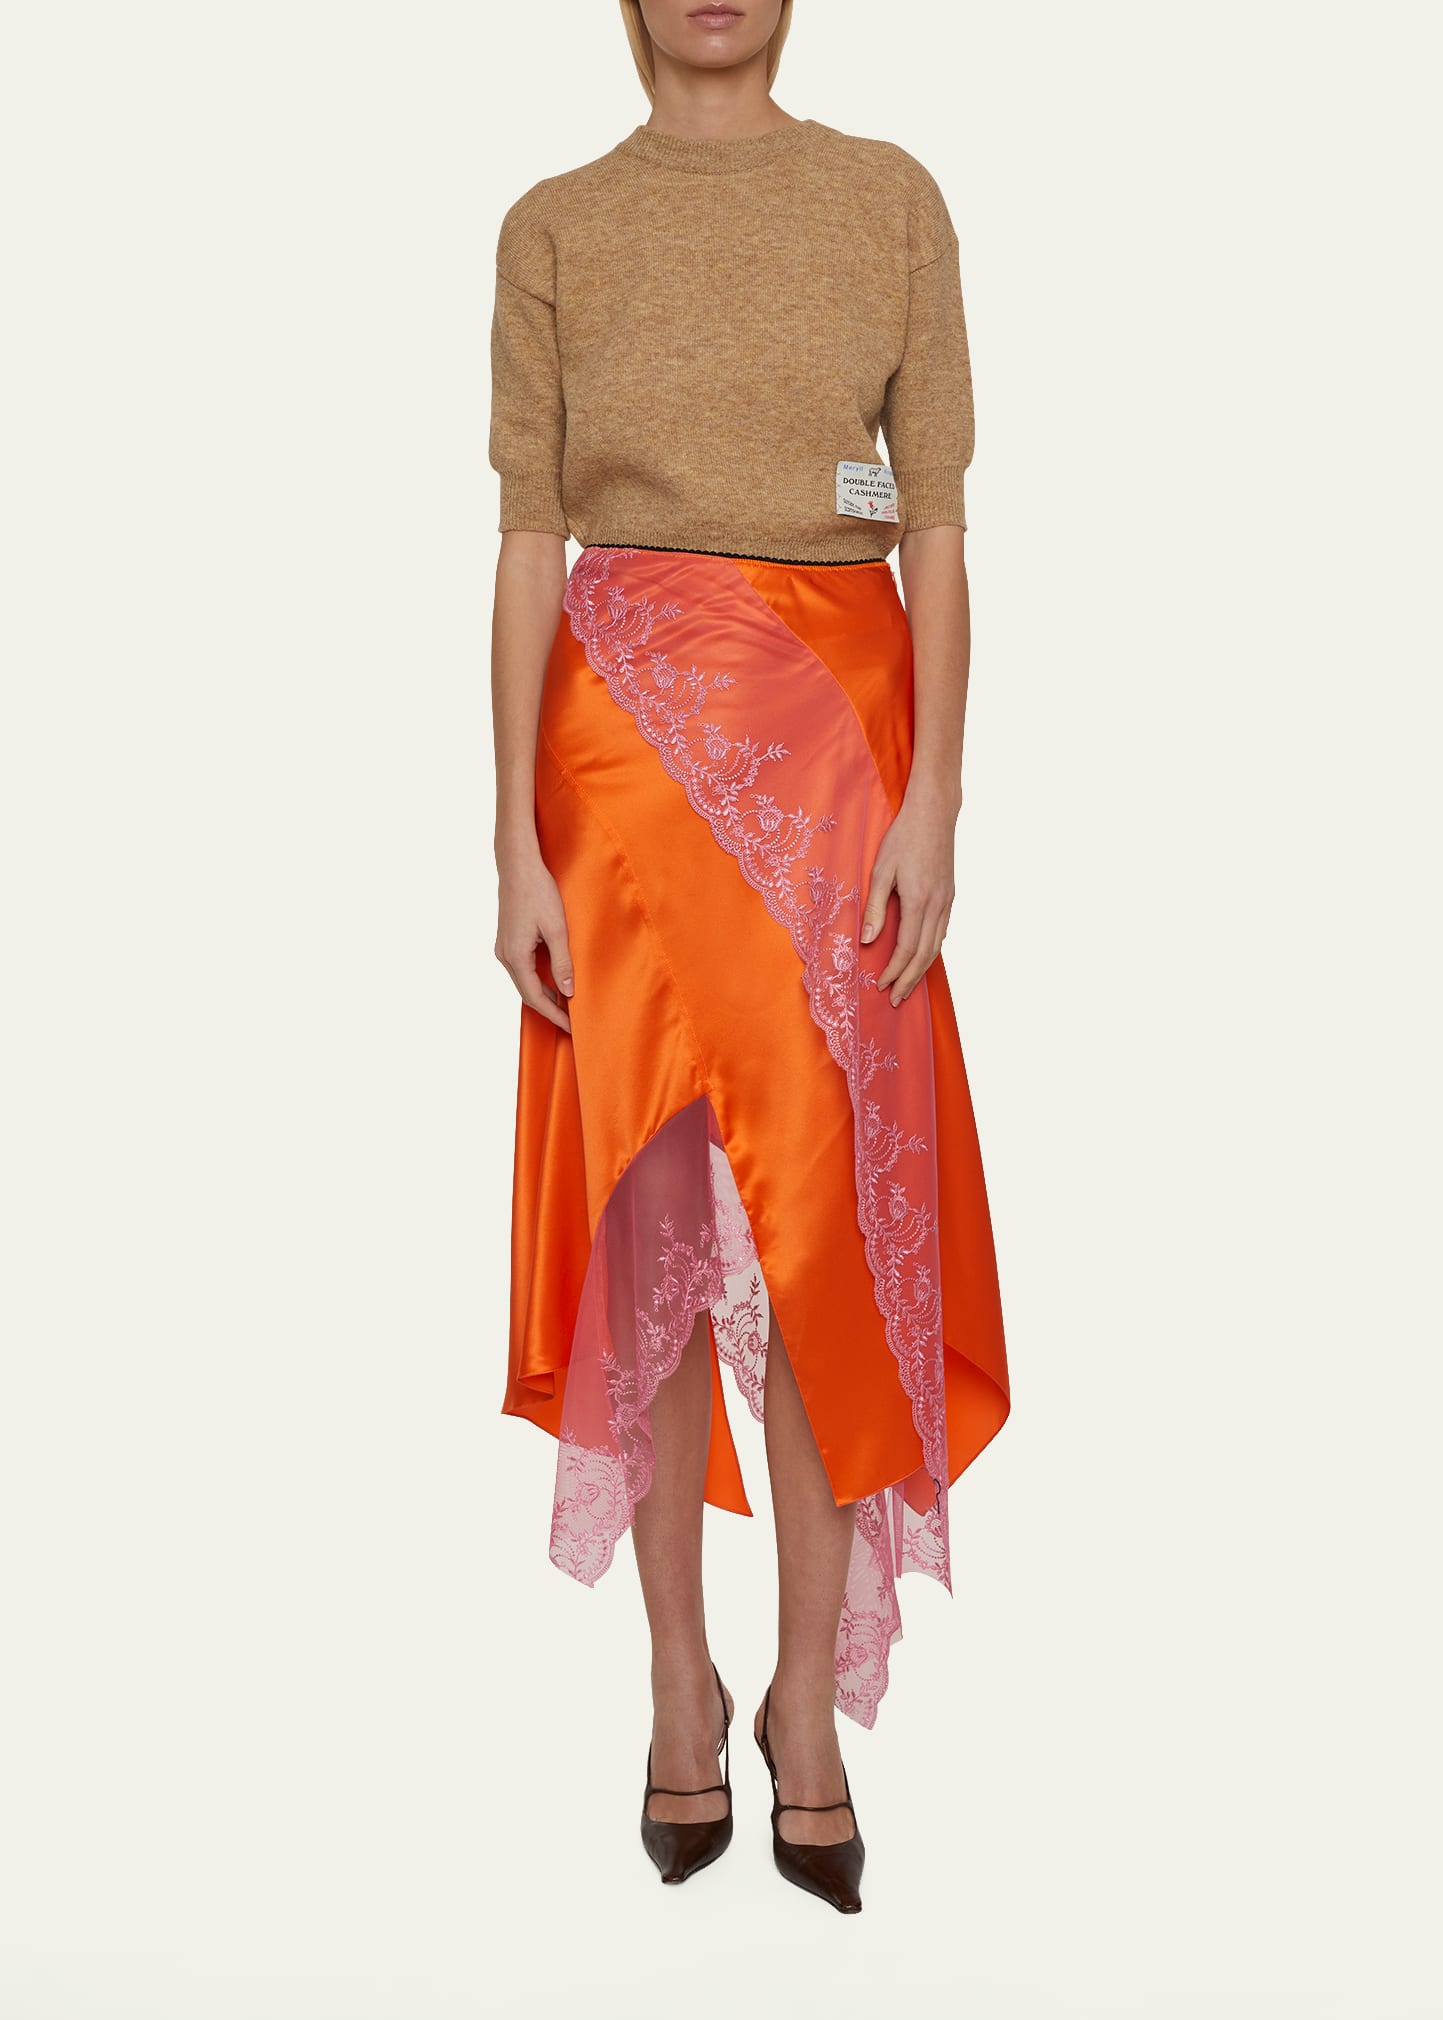 MERYLL ROGGE Satin Handkerchief Slip Skirt with Floral Lace